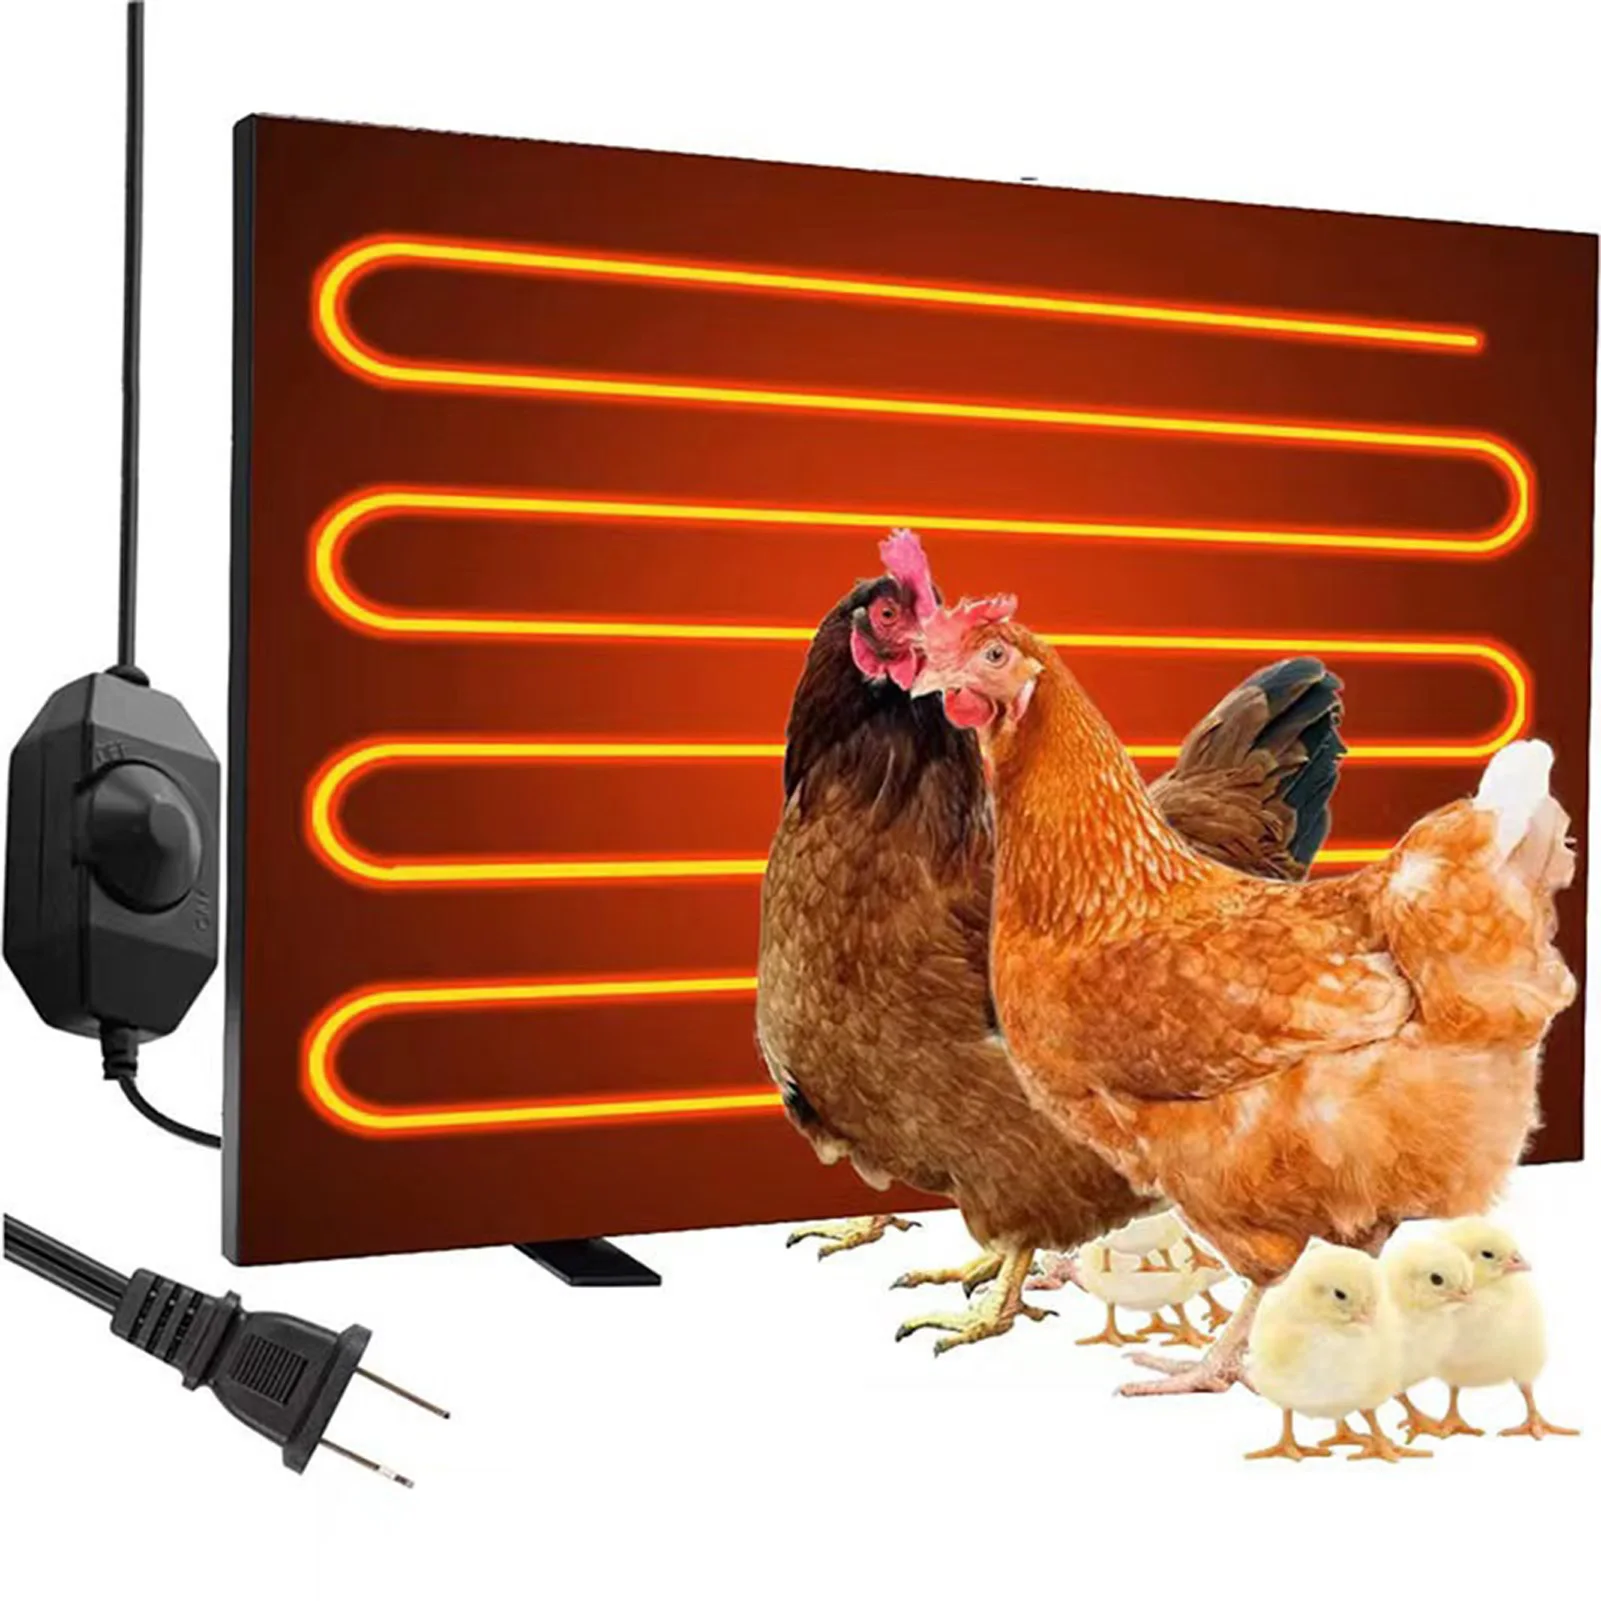 Radiant Heat Chicken Heater Effective Radiant Heat Range within 16''/40cm 131°F to 167 °F Temperature